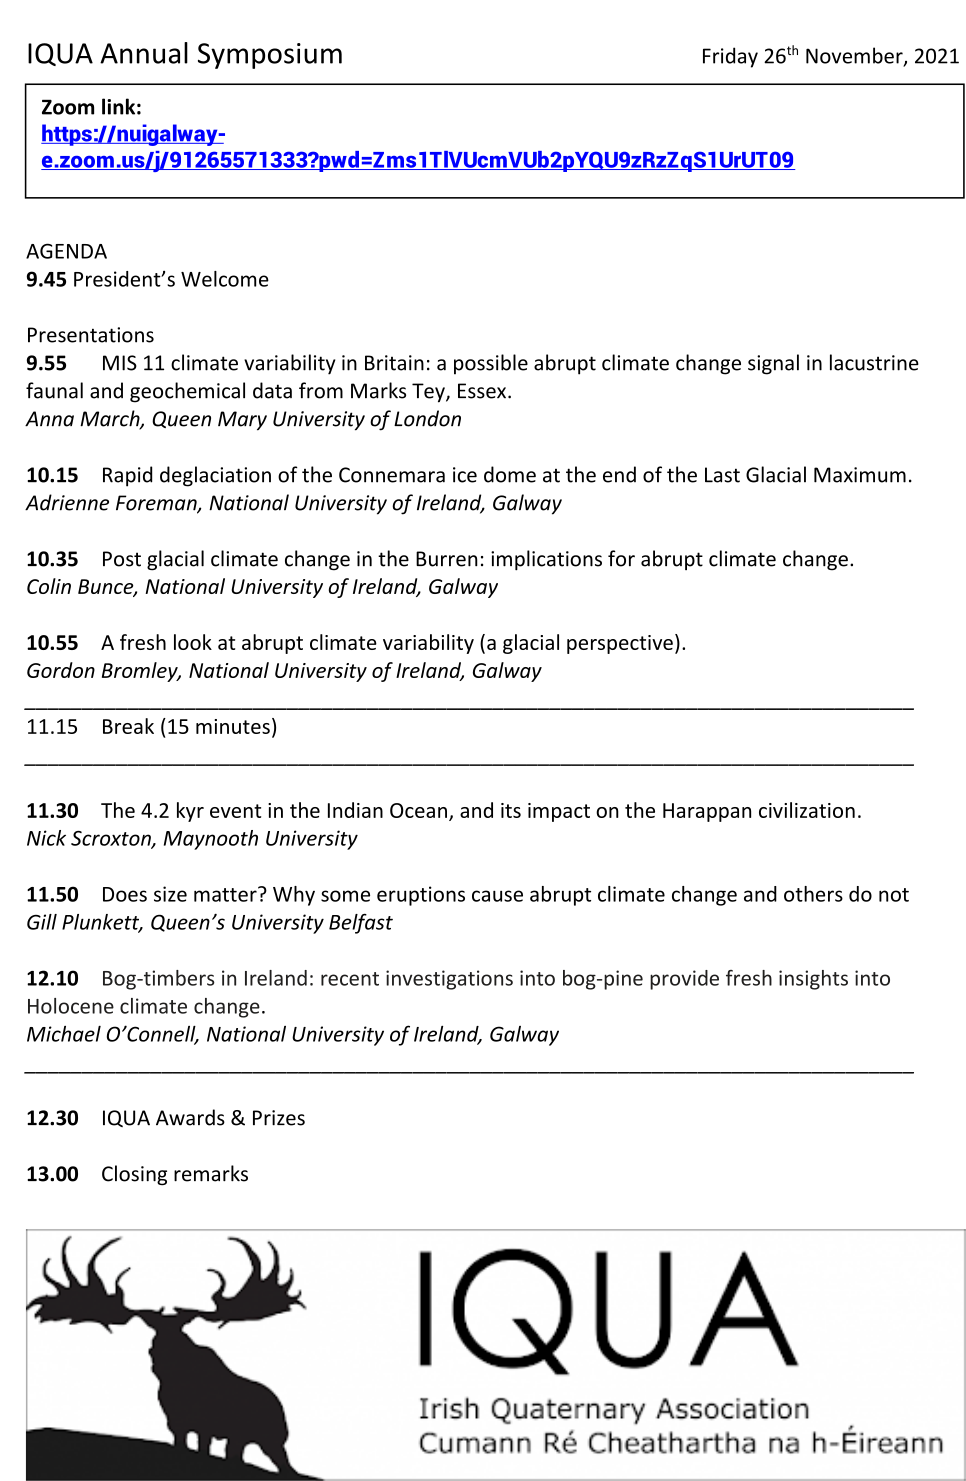 IQUA symposium 2021 programme